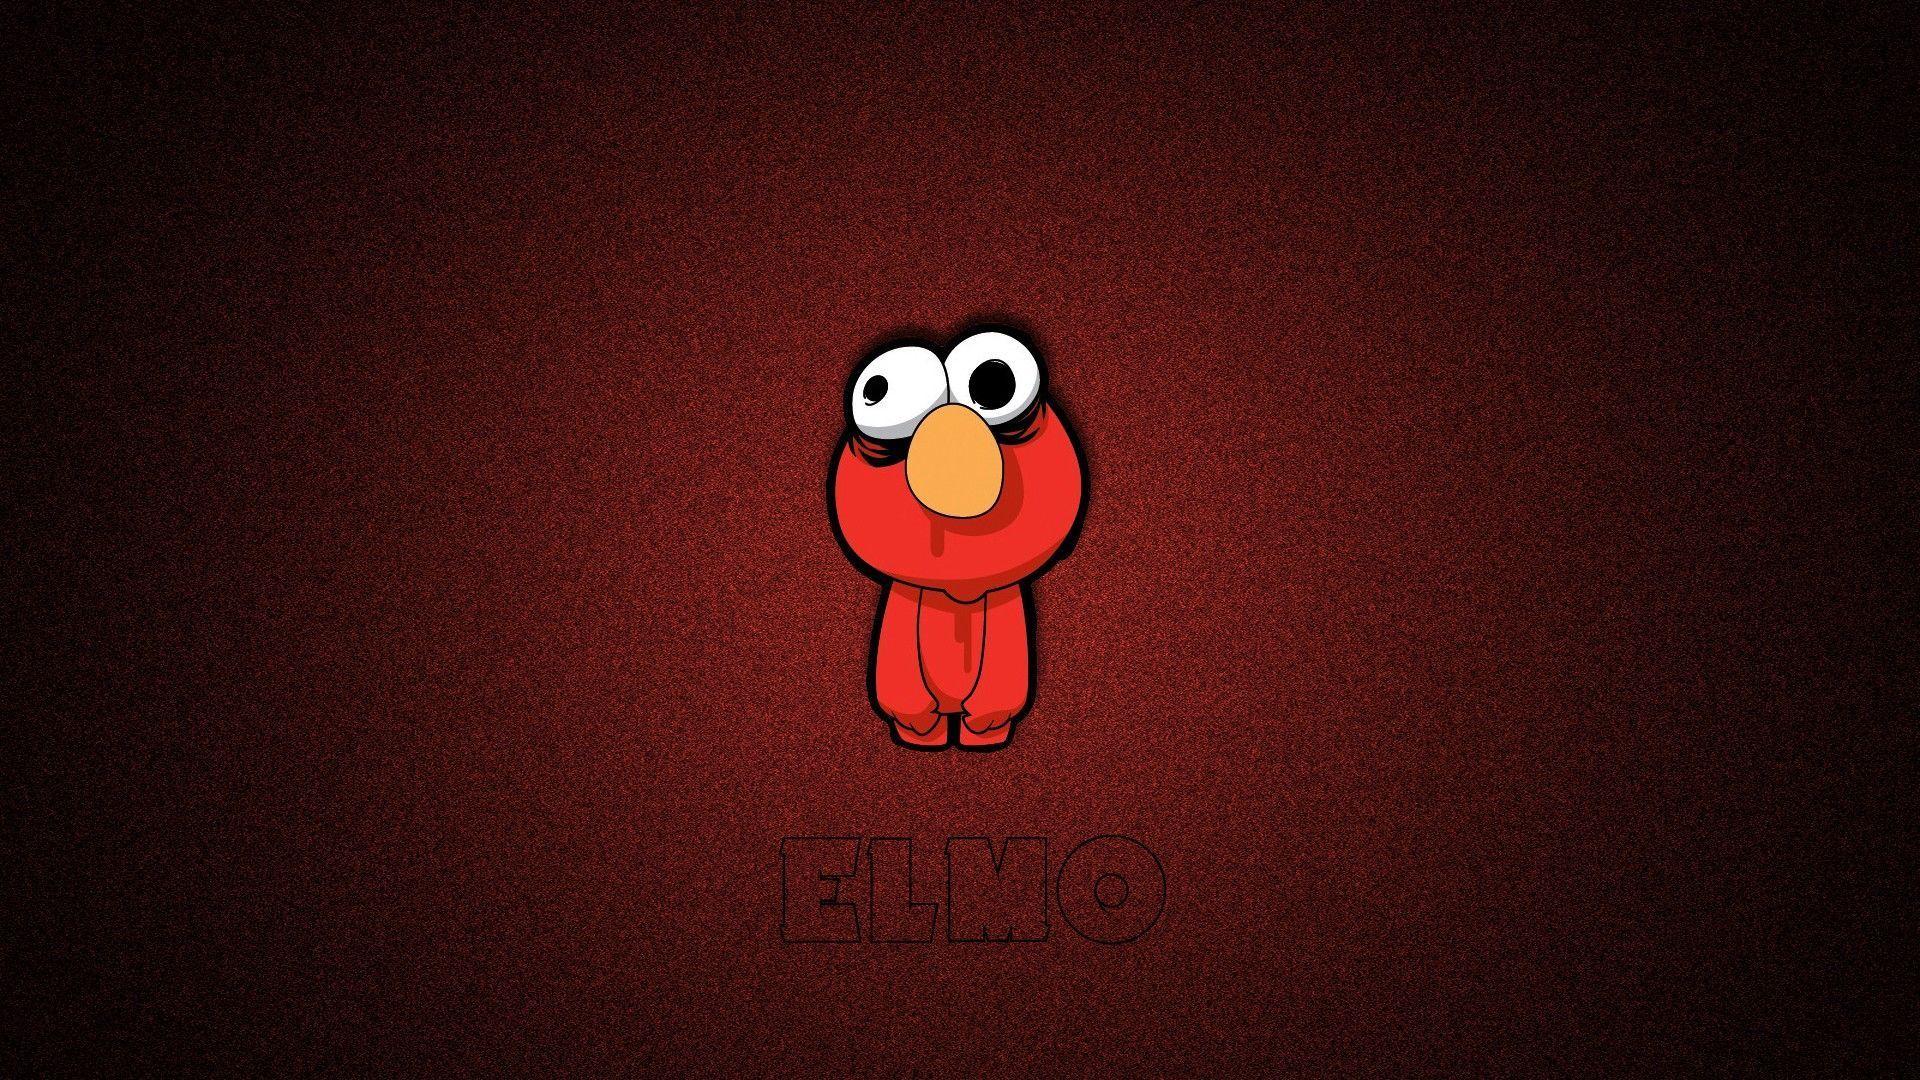 Elmo image Elmo wallpaper and background photo 1024×768 Elmo Wallpaper (34 Wallpaper)